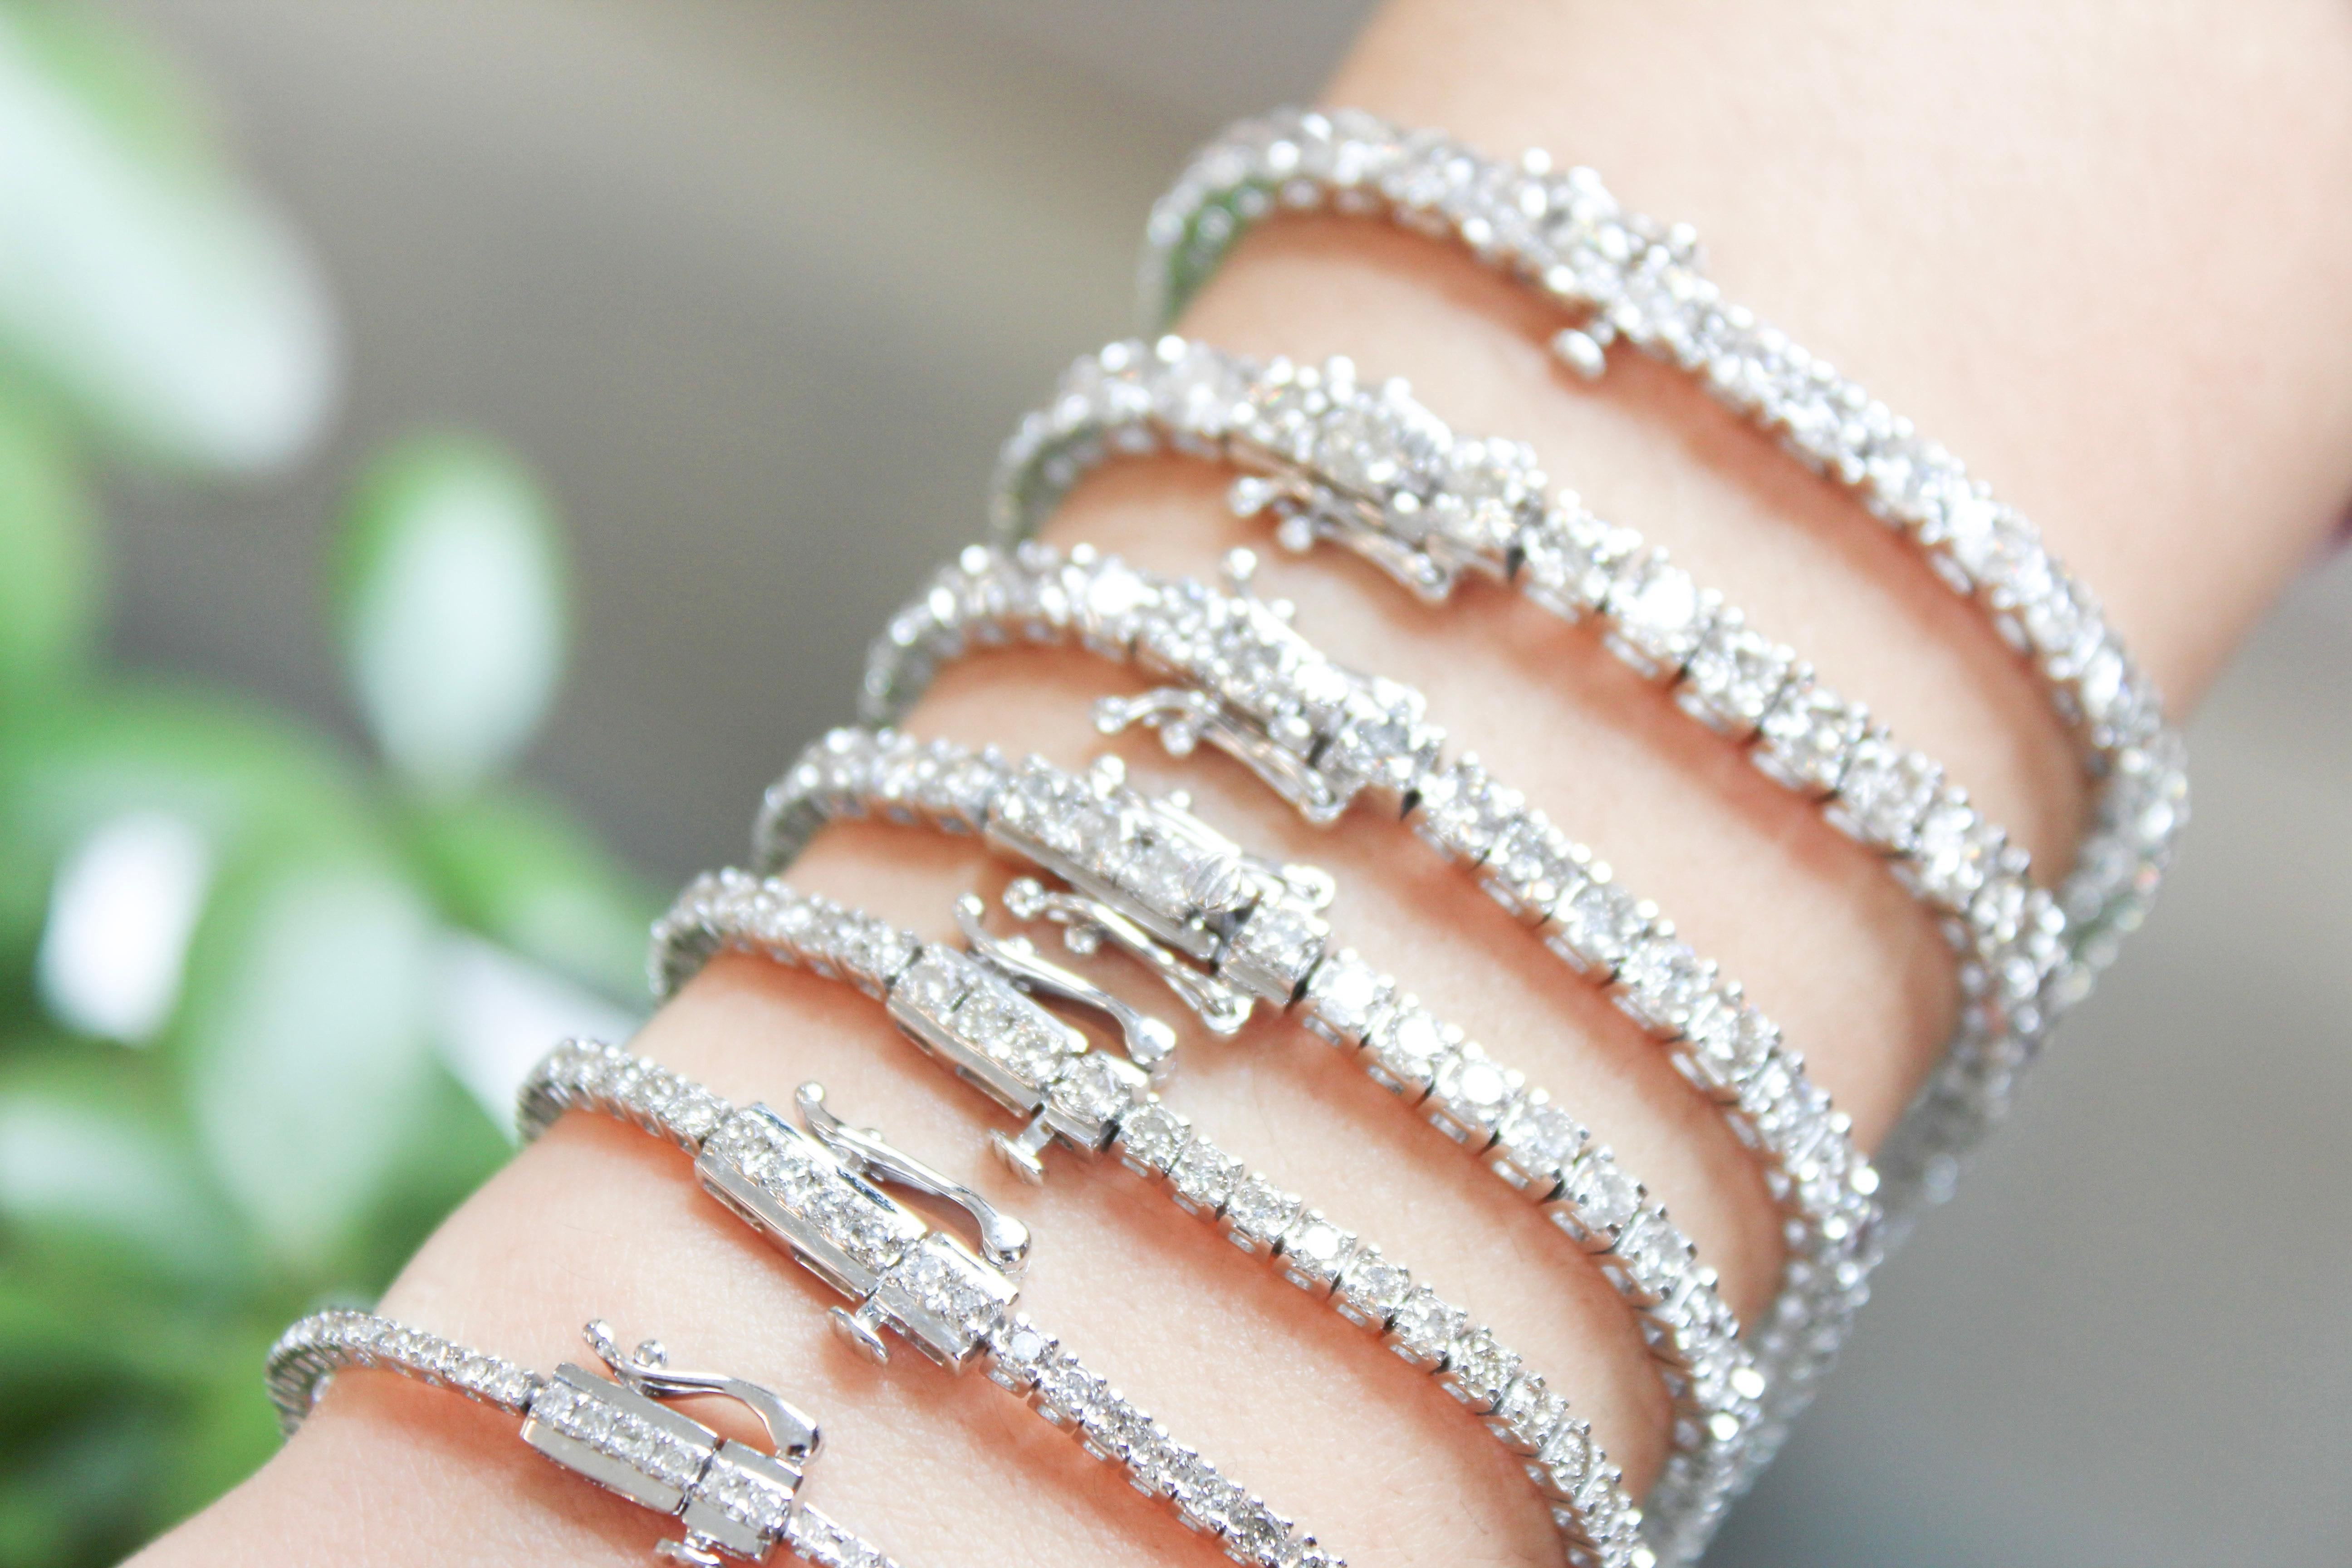 15 carat tennis bracelet